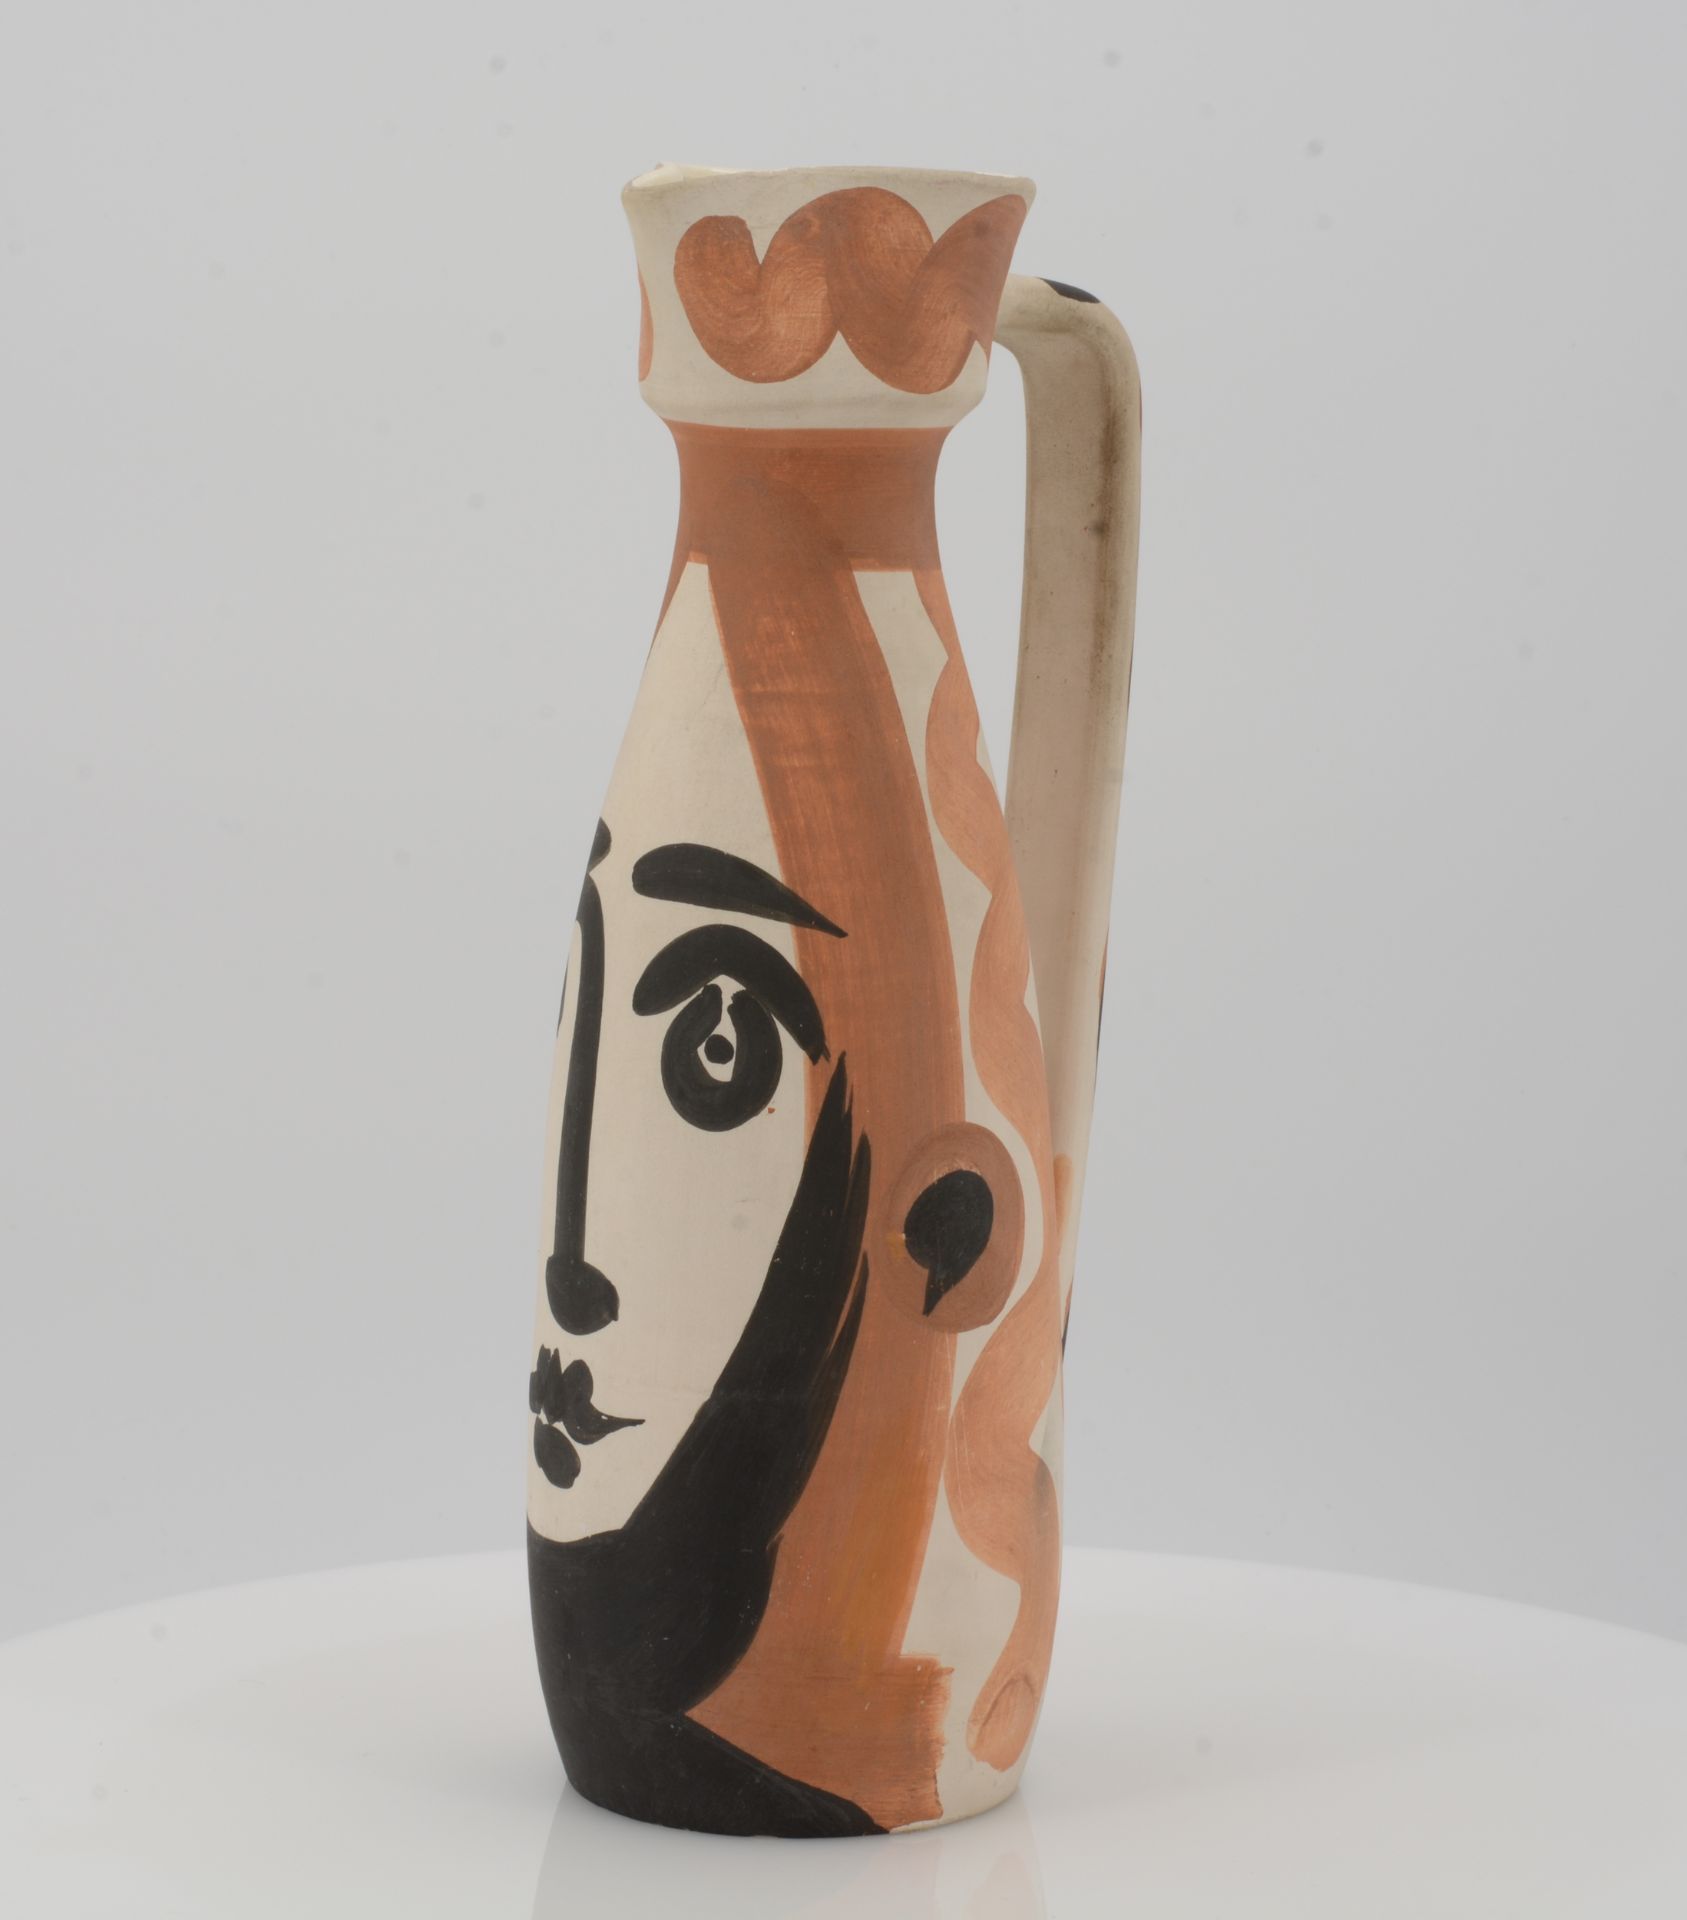 Picasso, Pablo1881 Malaga - 1973 MouginsFace. 1955. White earthenware clay, polychromed and glazed - Bild 3 aus 9